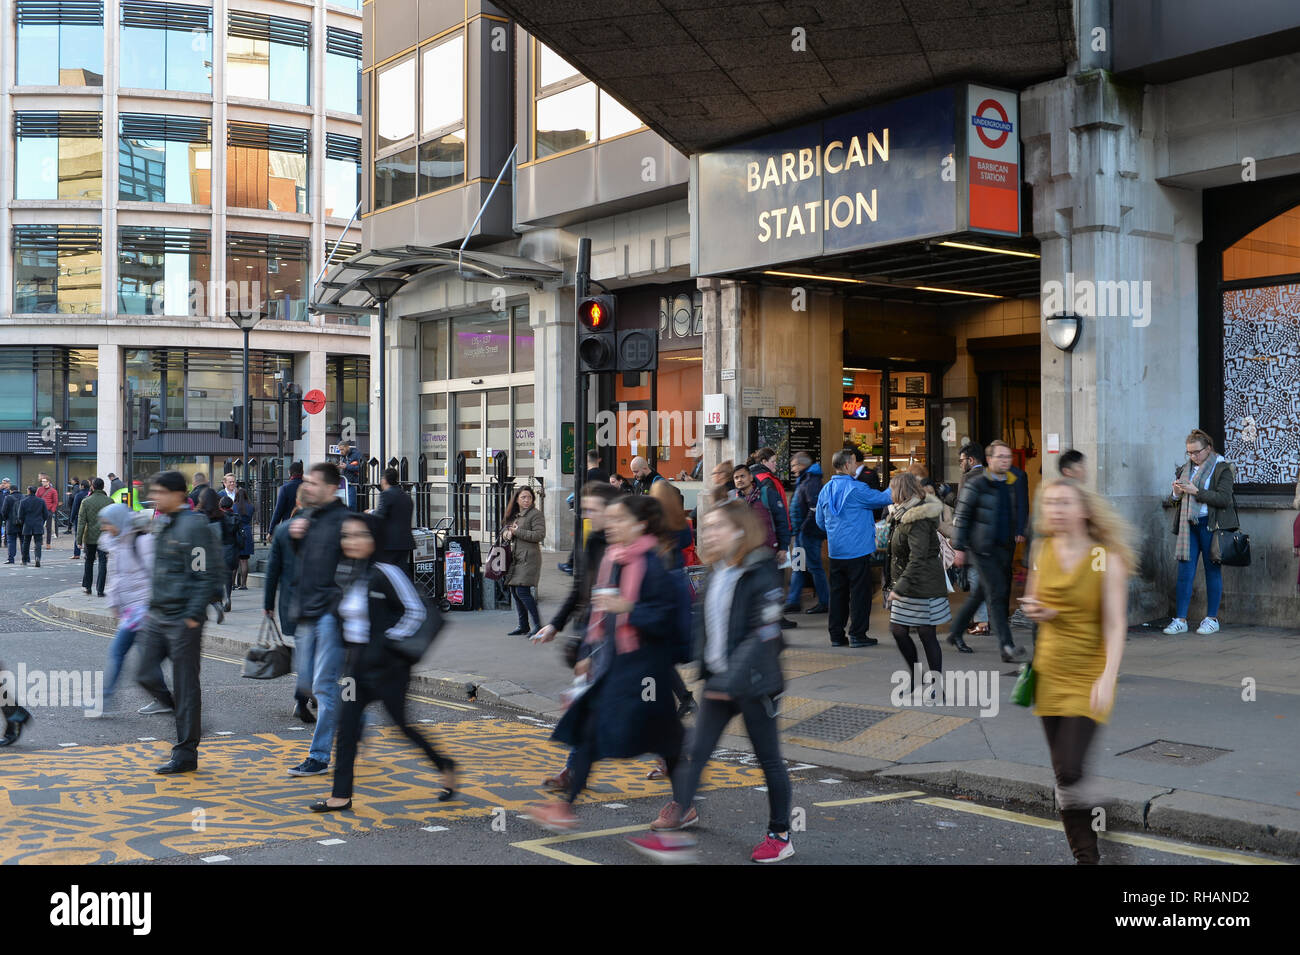 Barbican Station Stockfoto